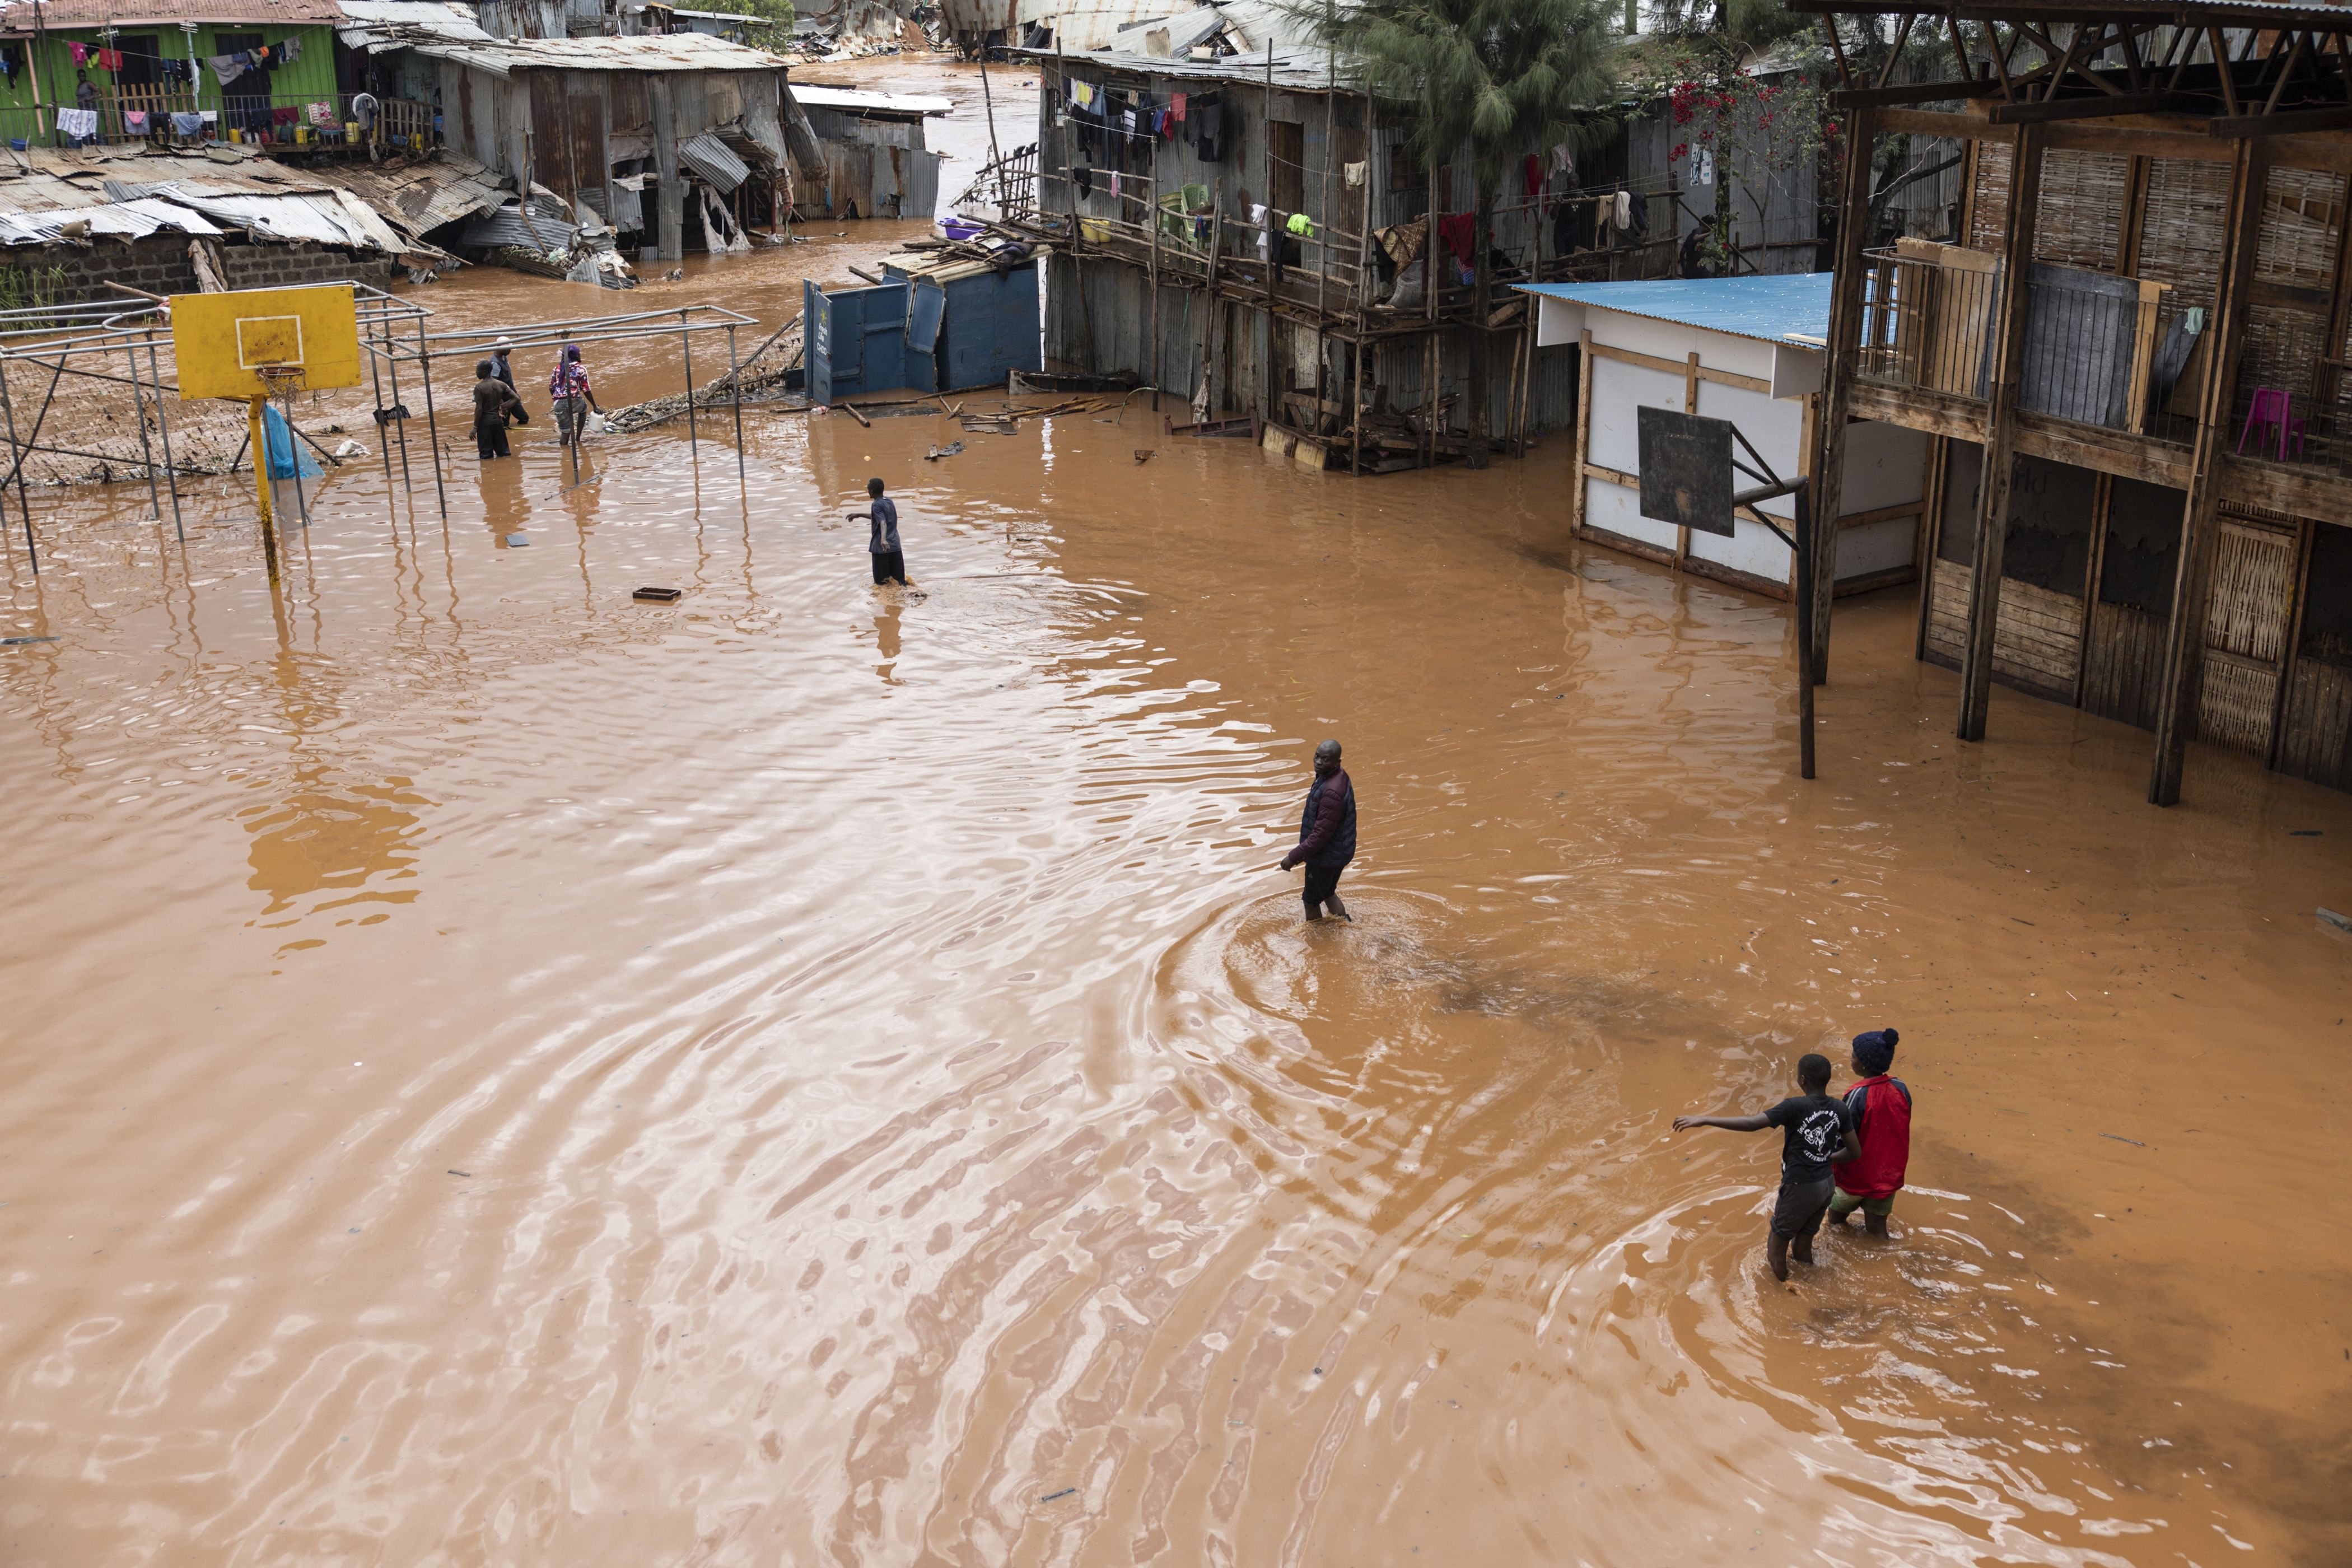  فيضانات كينيا تخلف 70 قتيلا منذ مارس .